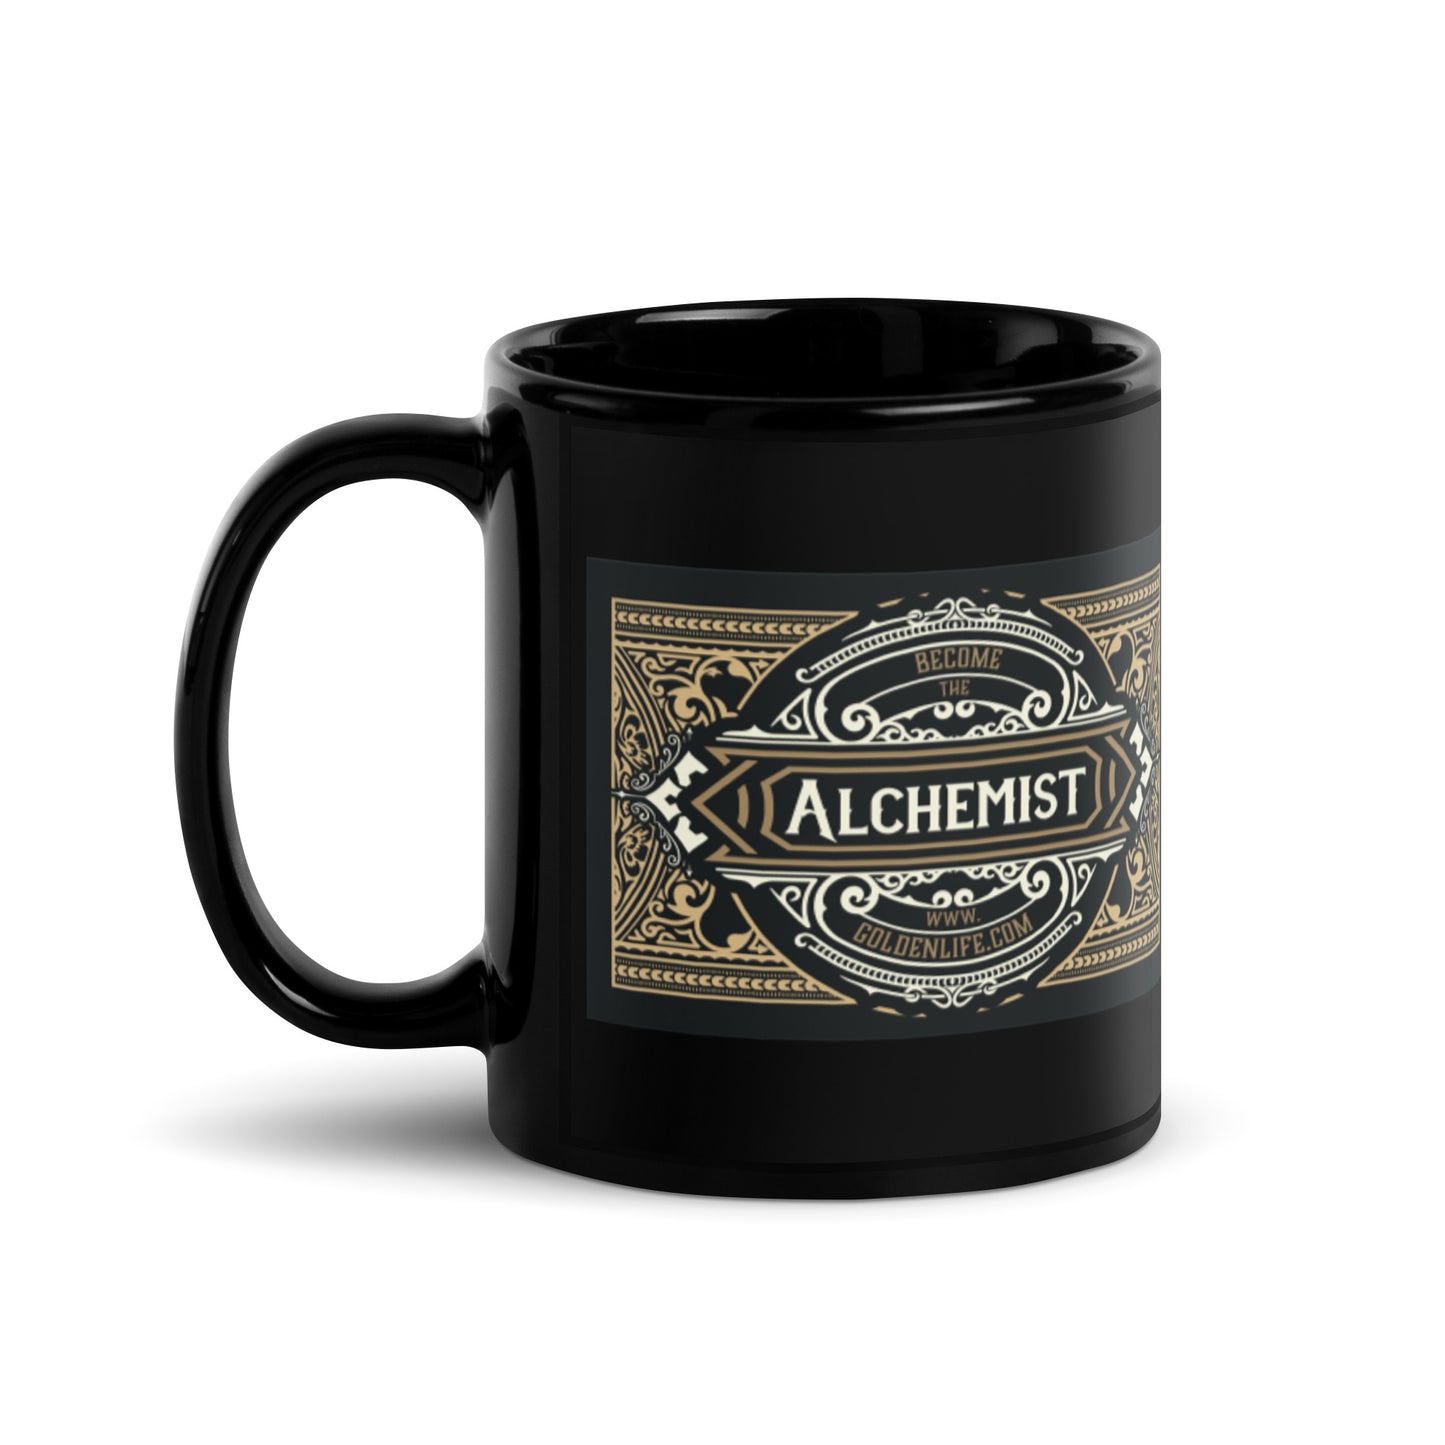 Becoming the Alchemist Mug